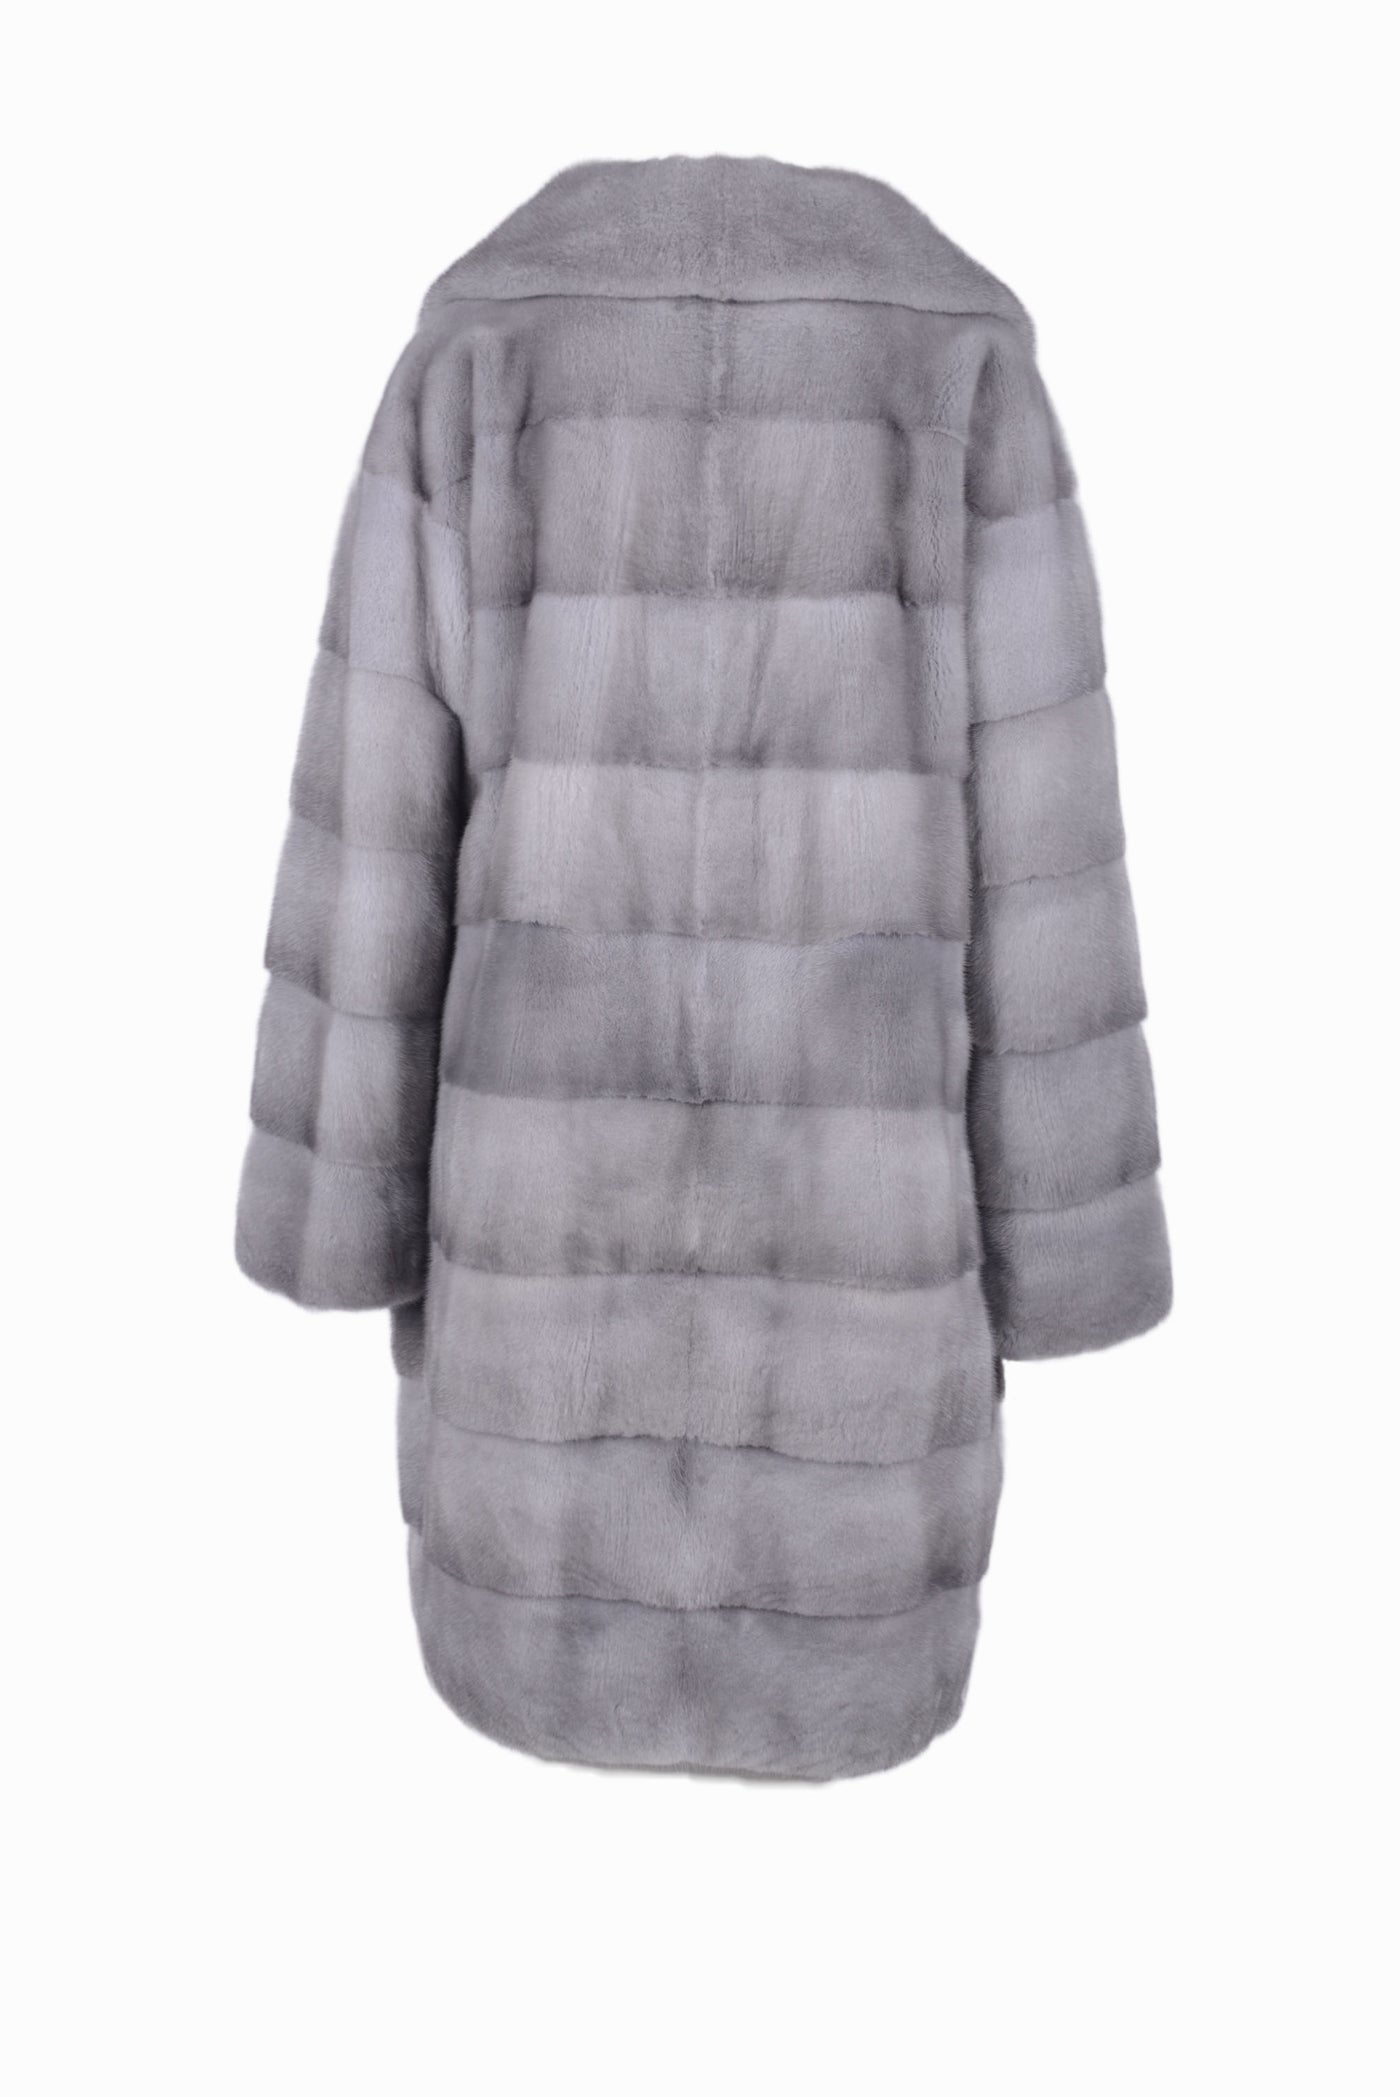 Classy basic mink fur coat with english collar